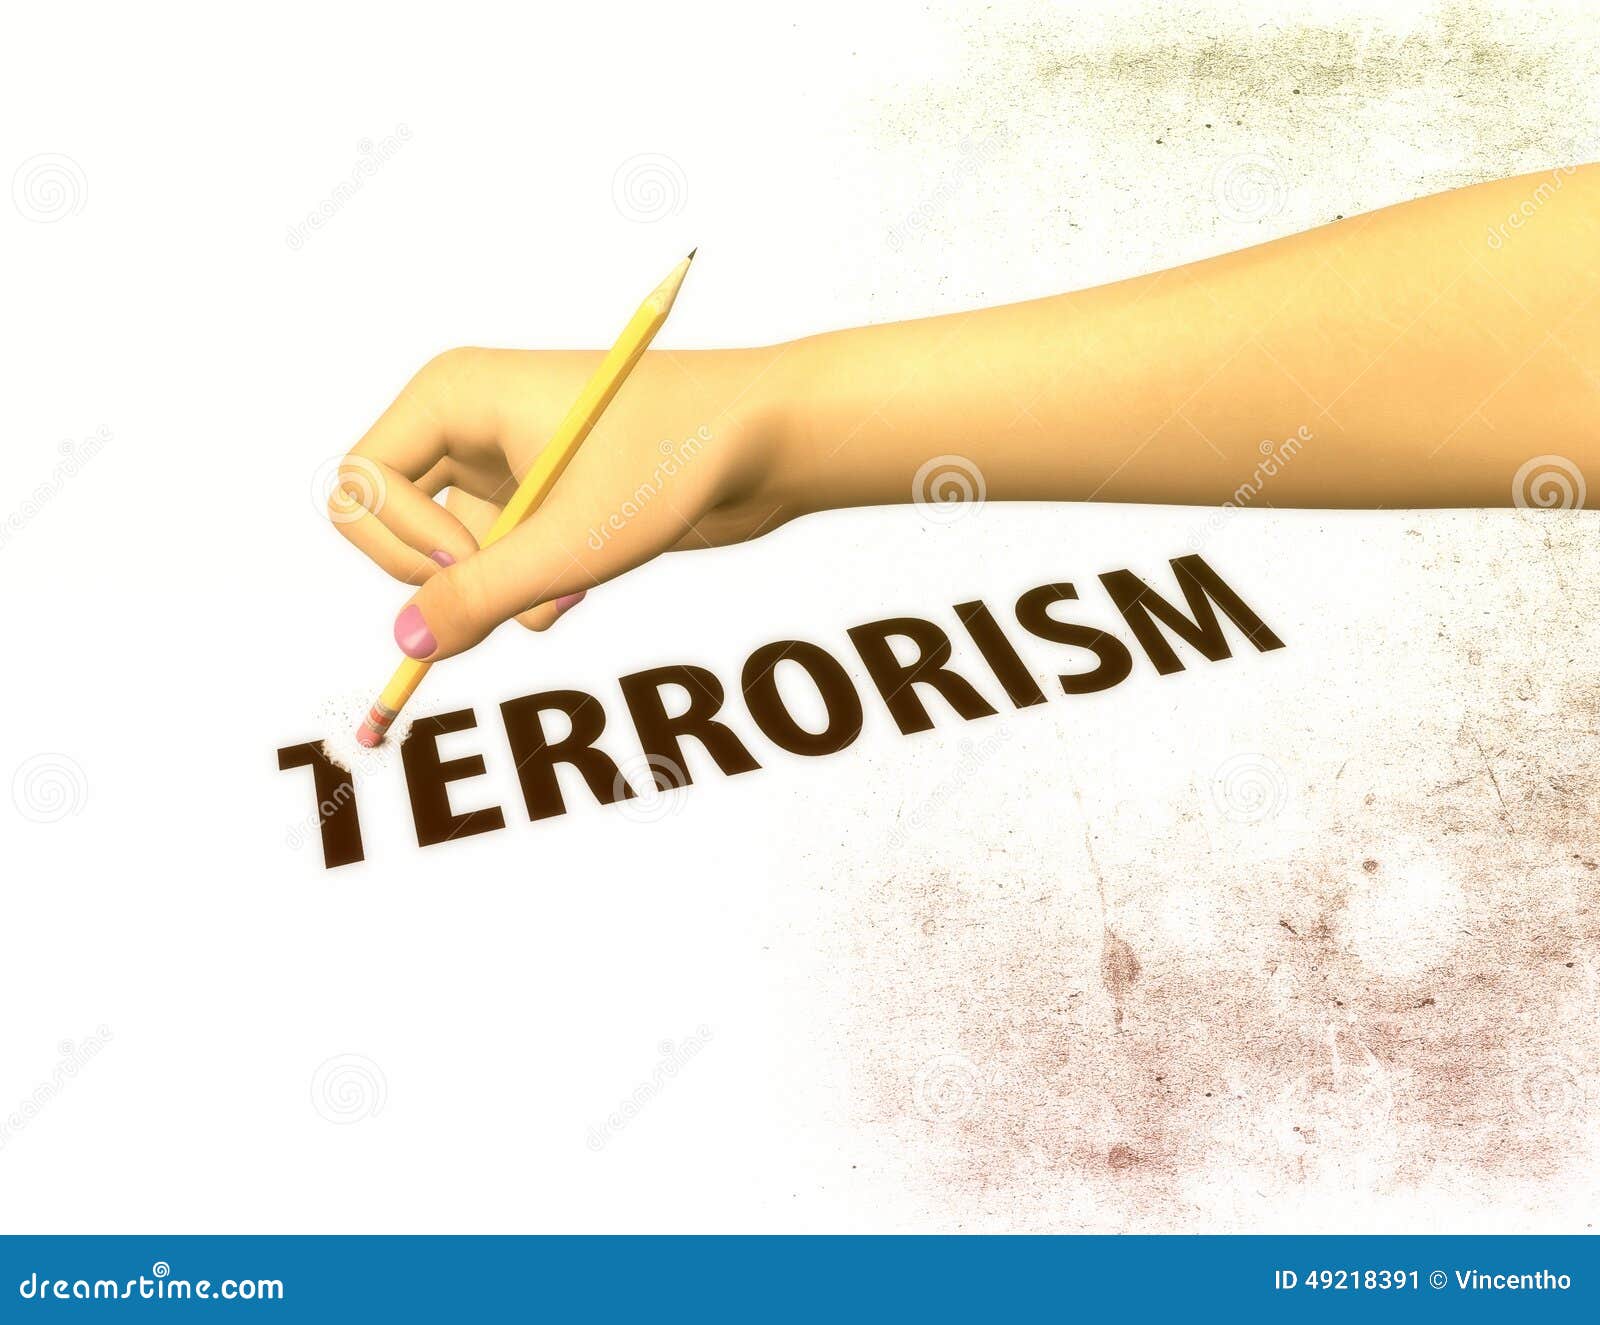 pencil erasing off the word terrorism 